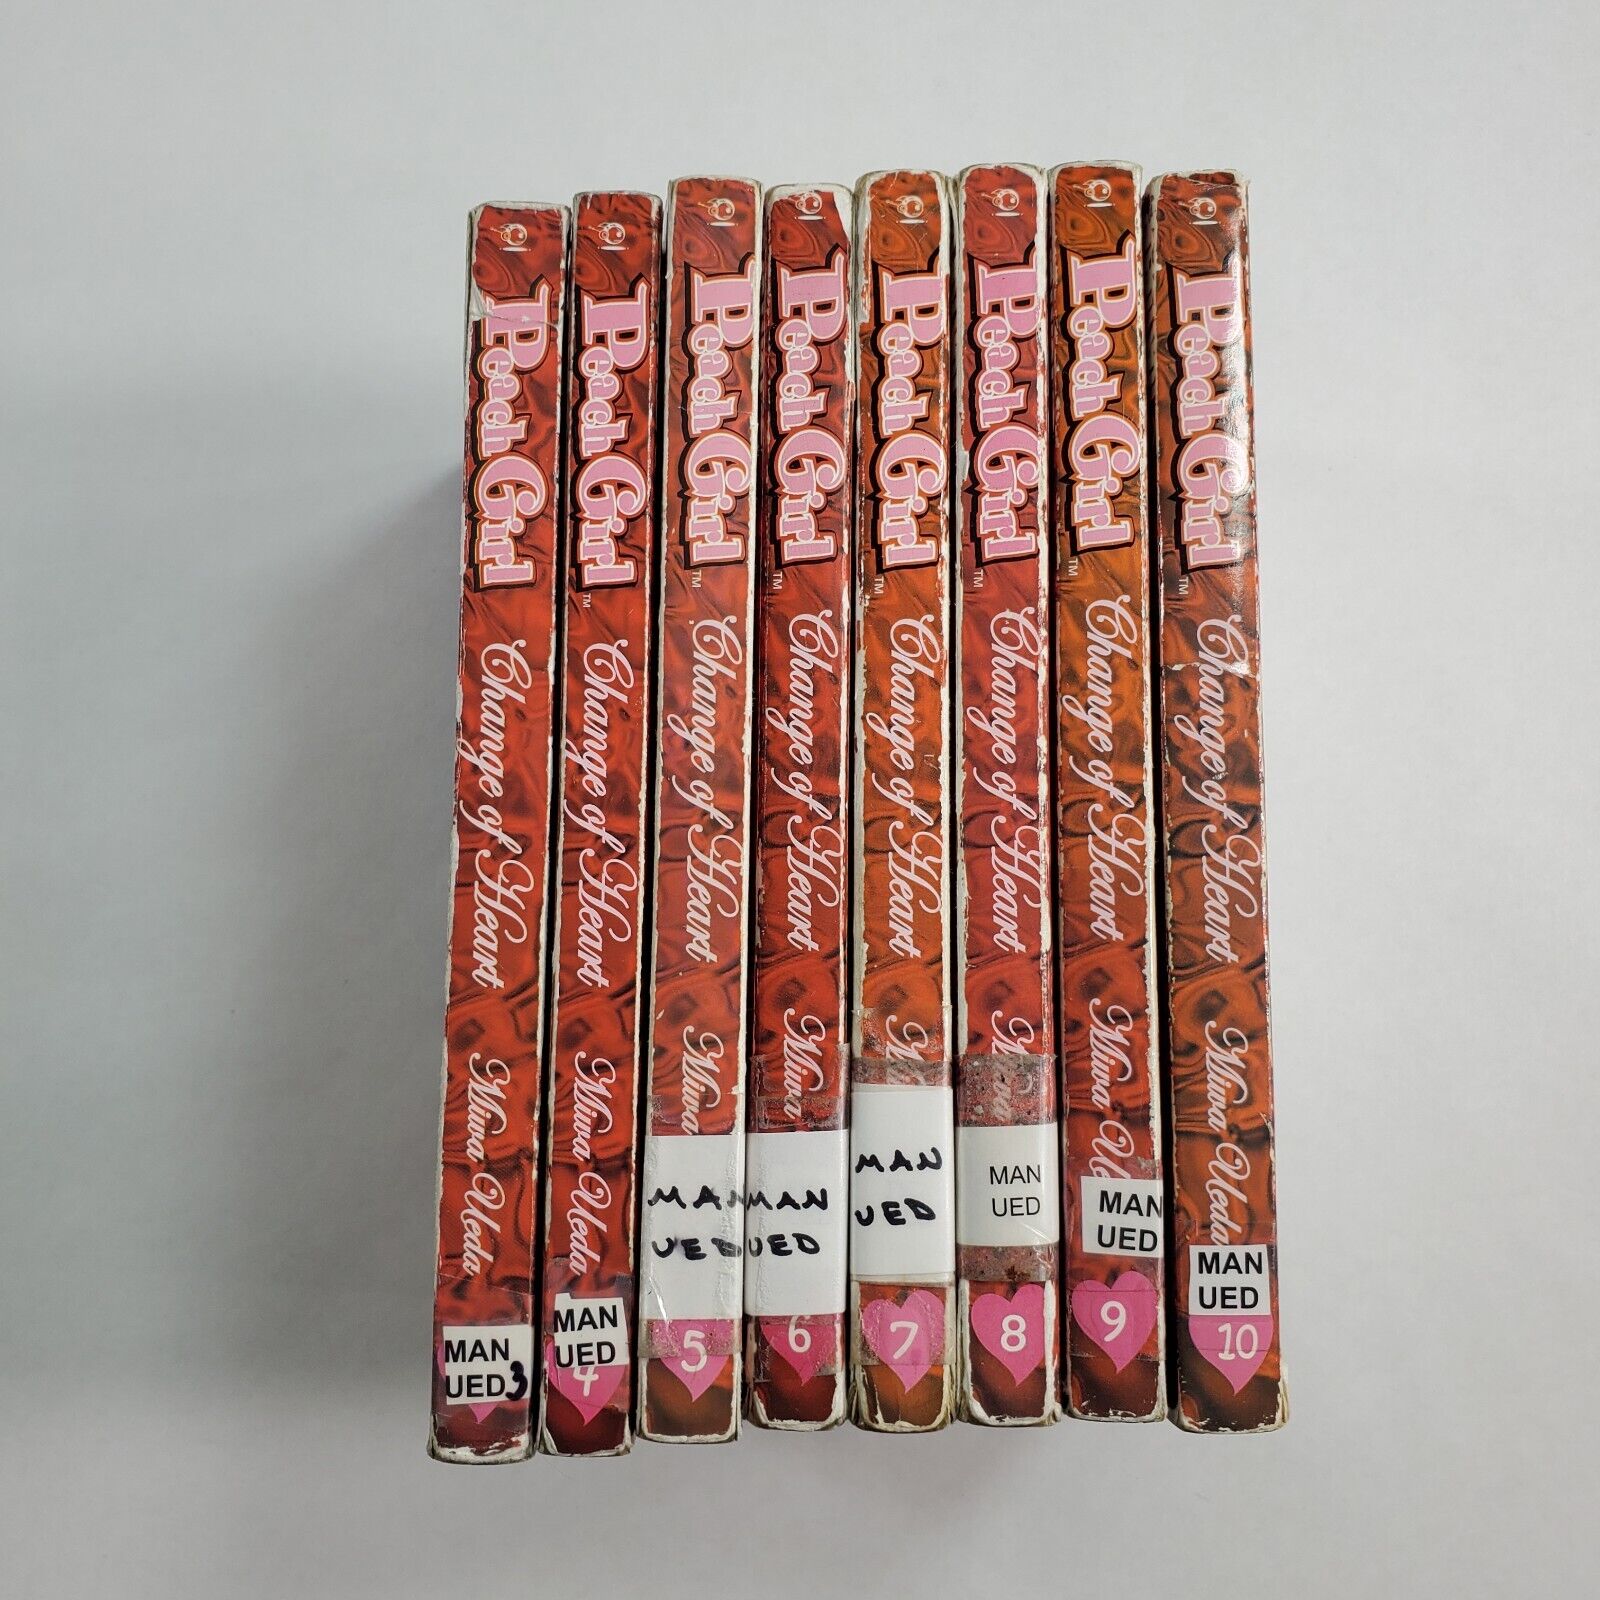 Lot of 8 Peach Girl Change of Heart Manga Books Volumes 3-10 Miwa Ueda Paperback